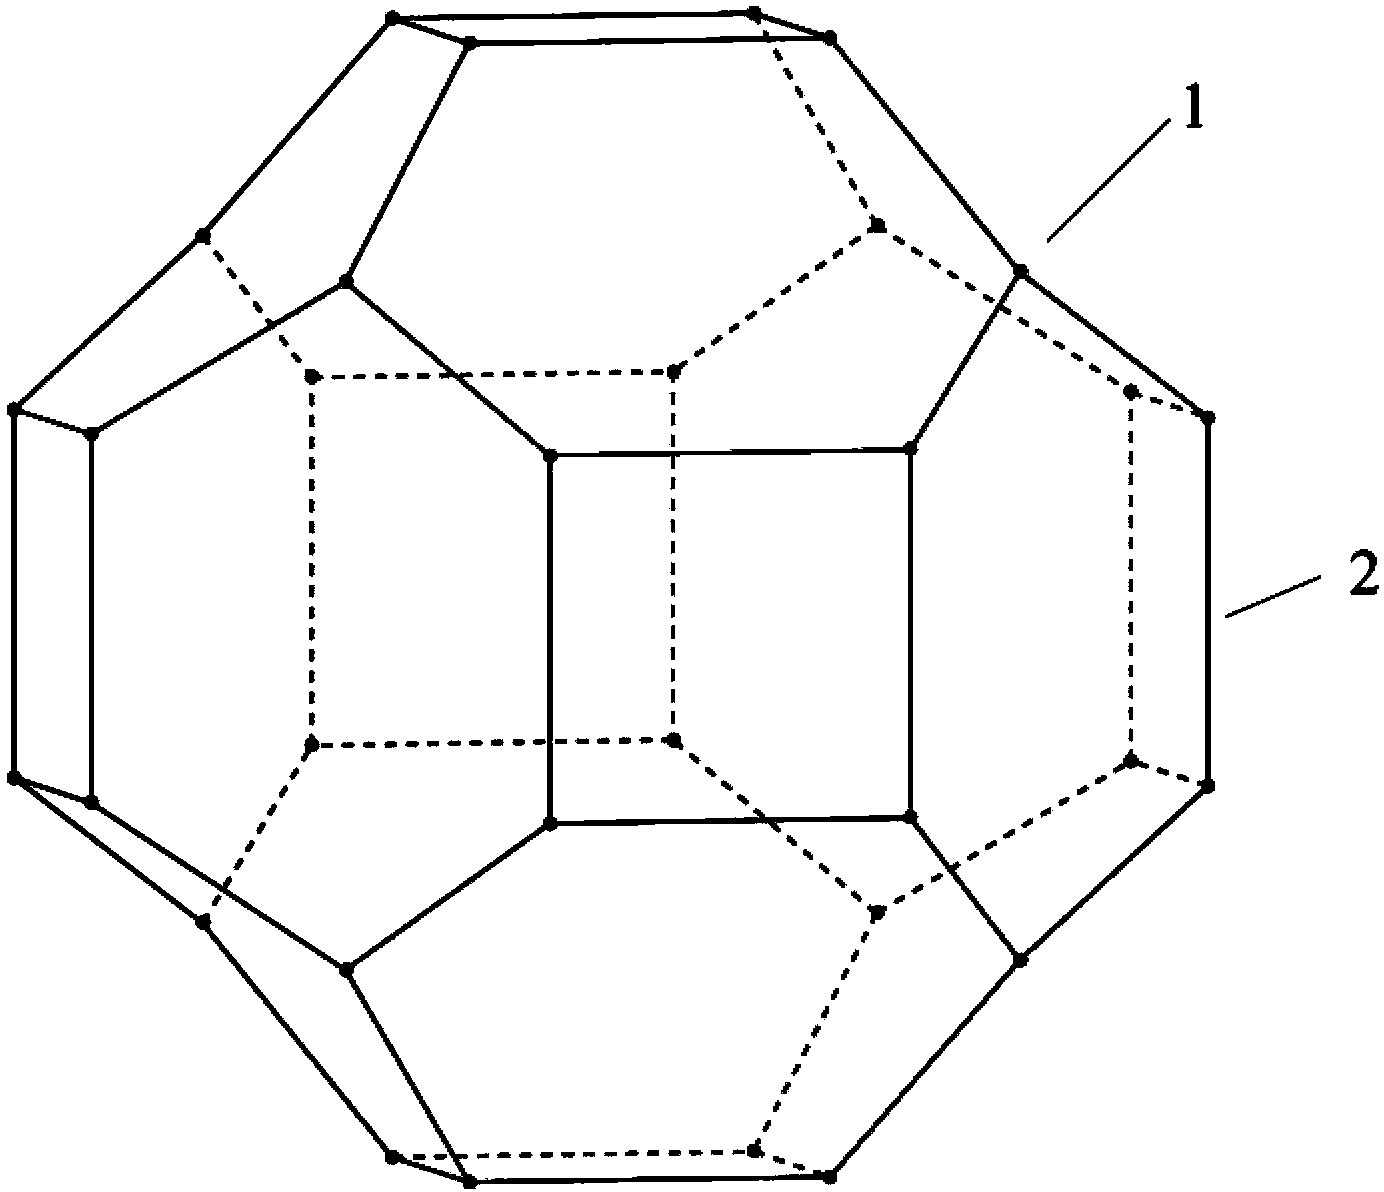 Regular hexahedral symmetrical deployable mechanism unit